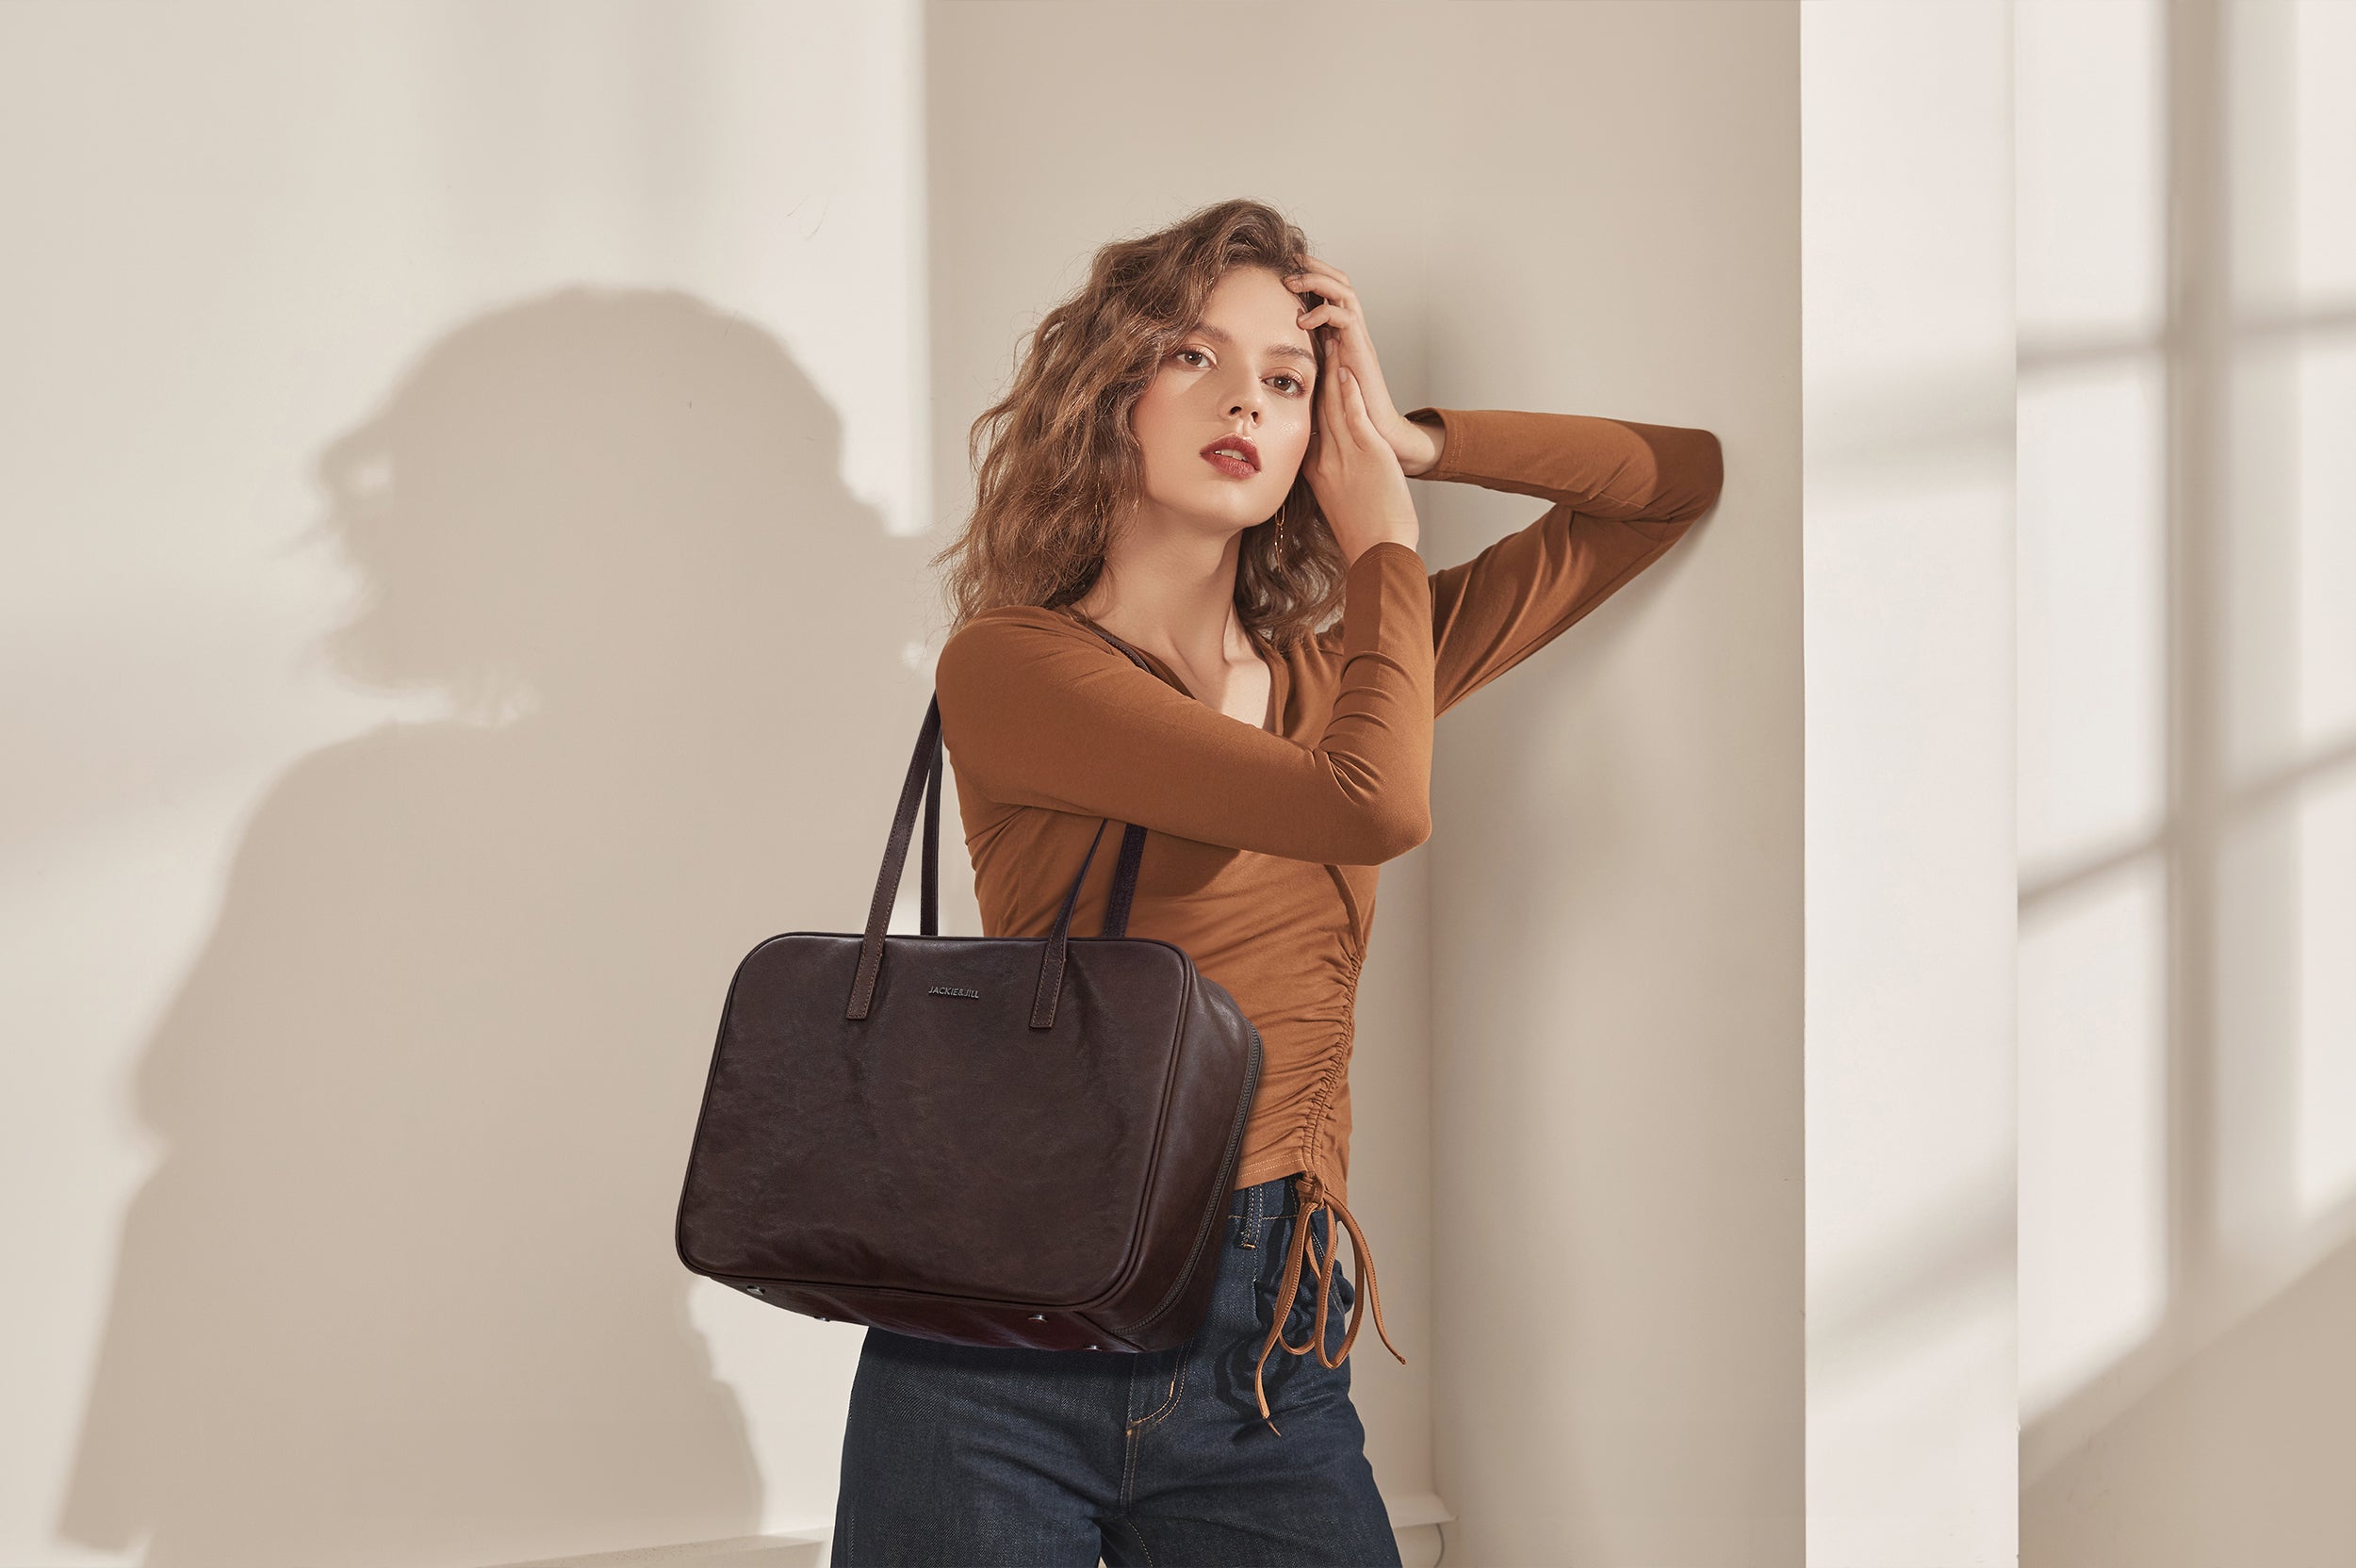 Explore Our Fashion-Forward Women's Bags